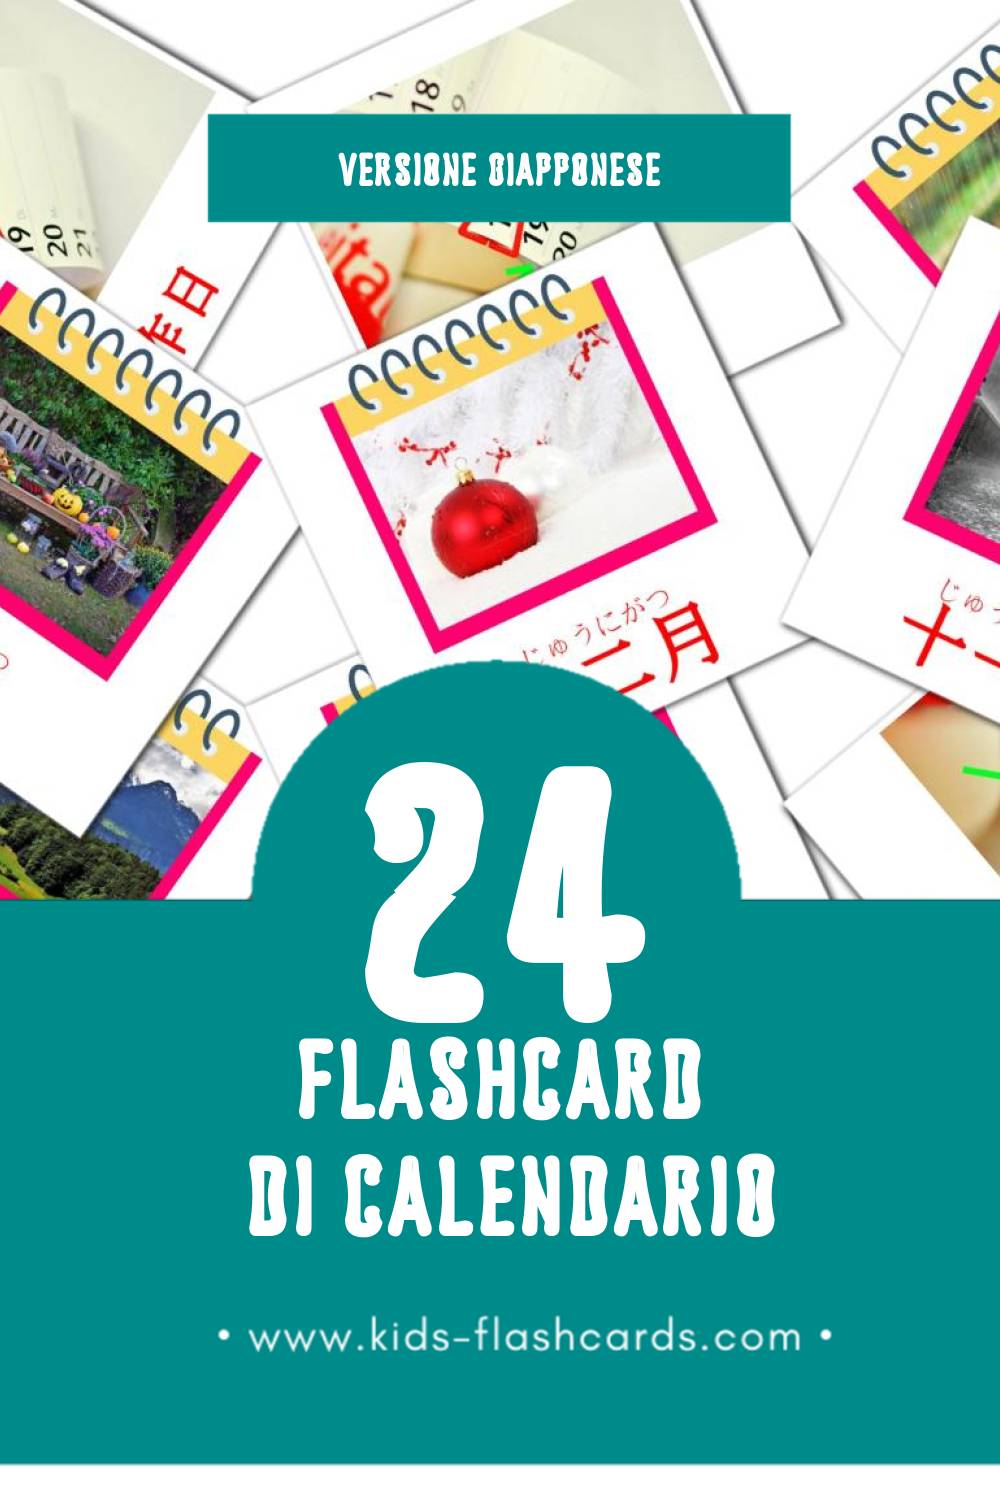 Schede visive sugli カレンダー per bambini (24 schede in Giapponese)